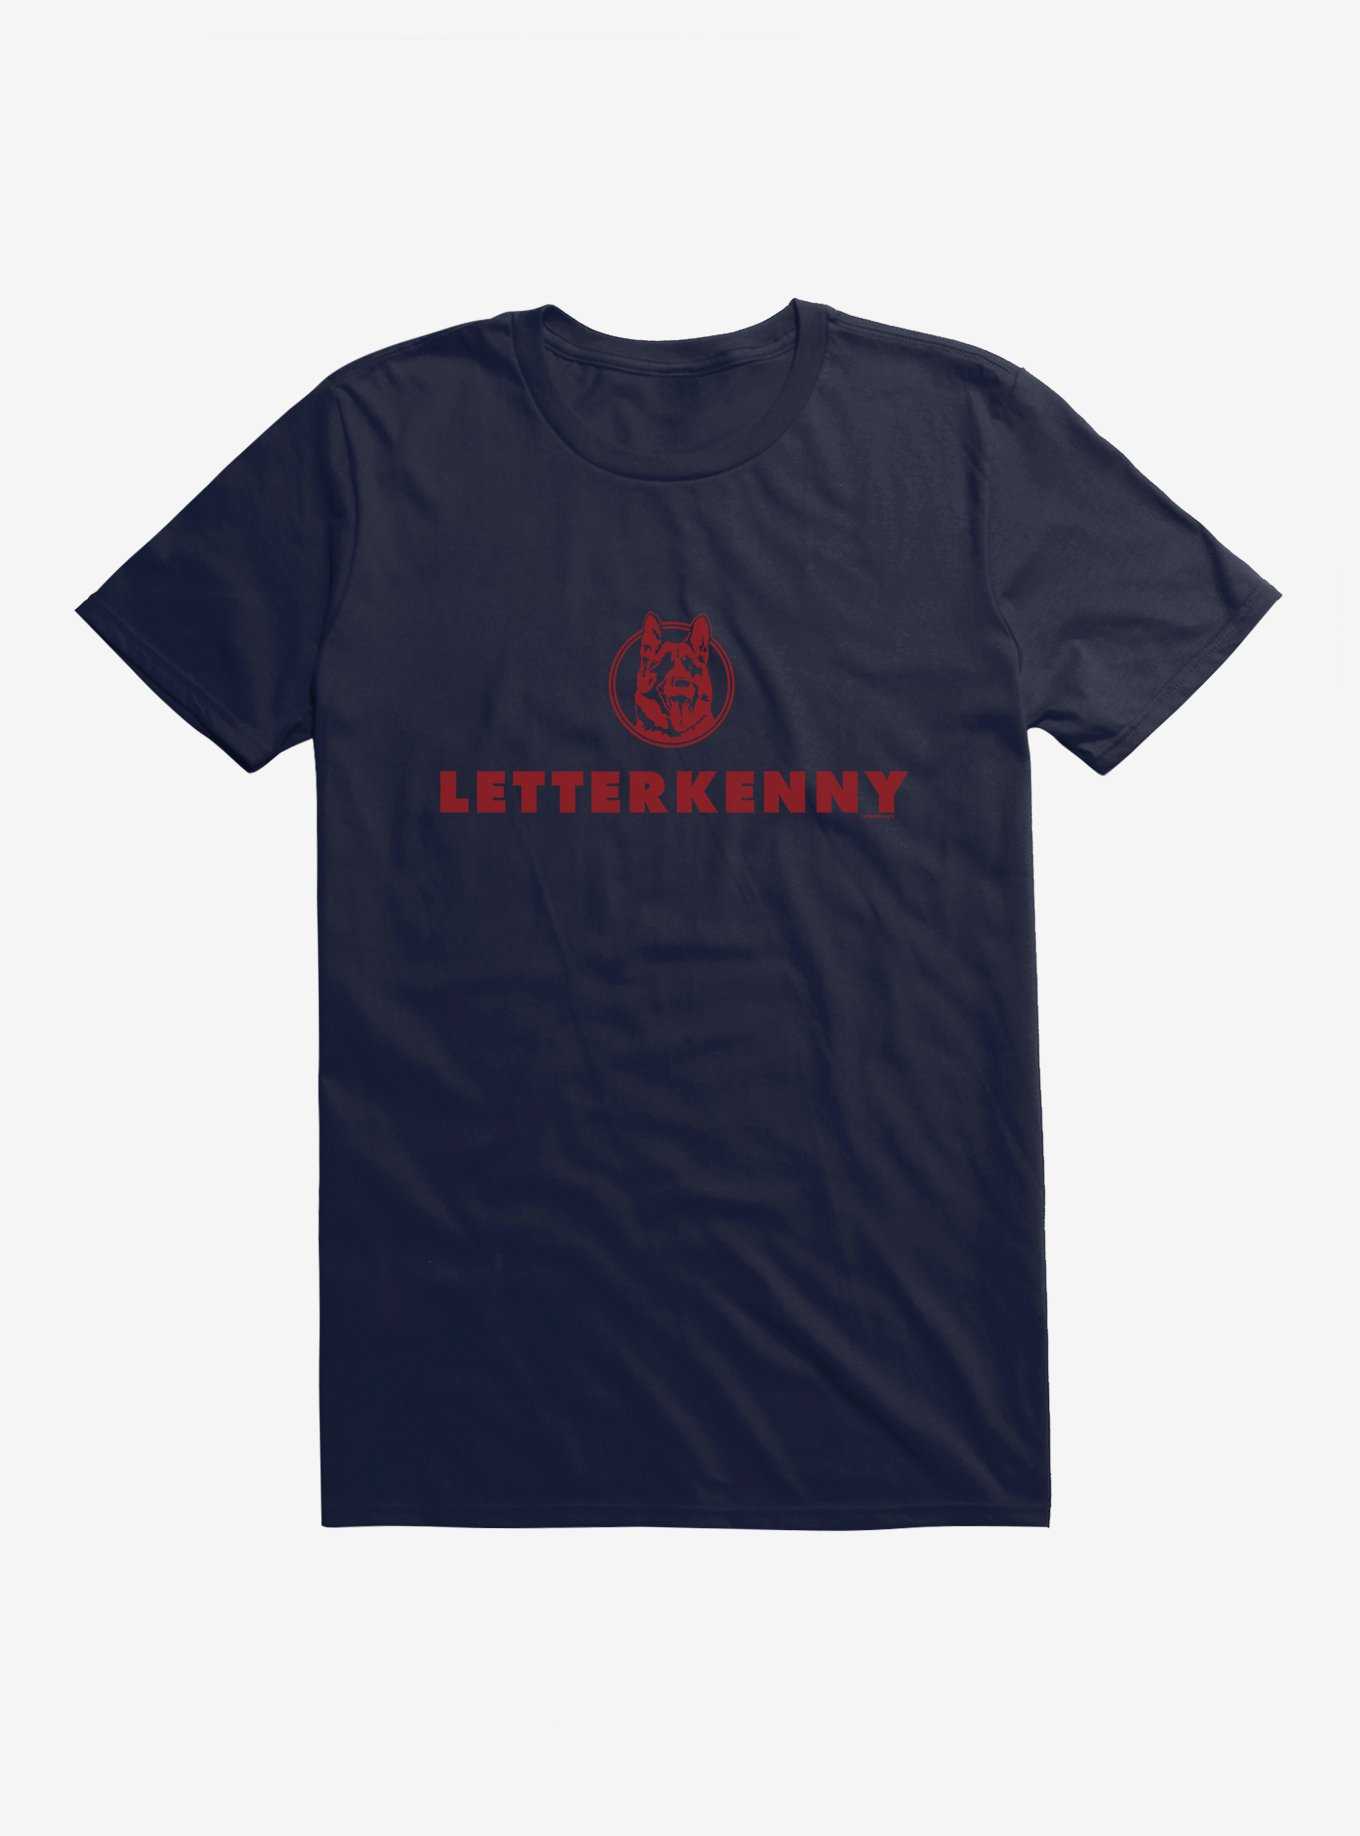 Letterkenny, Official Store